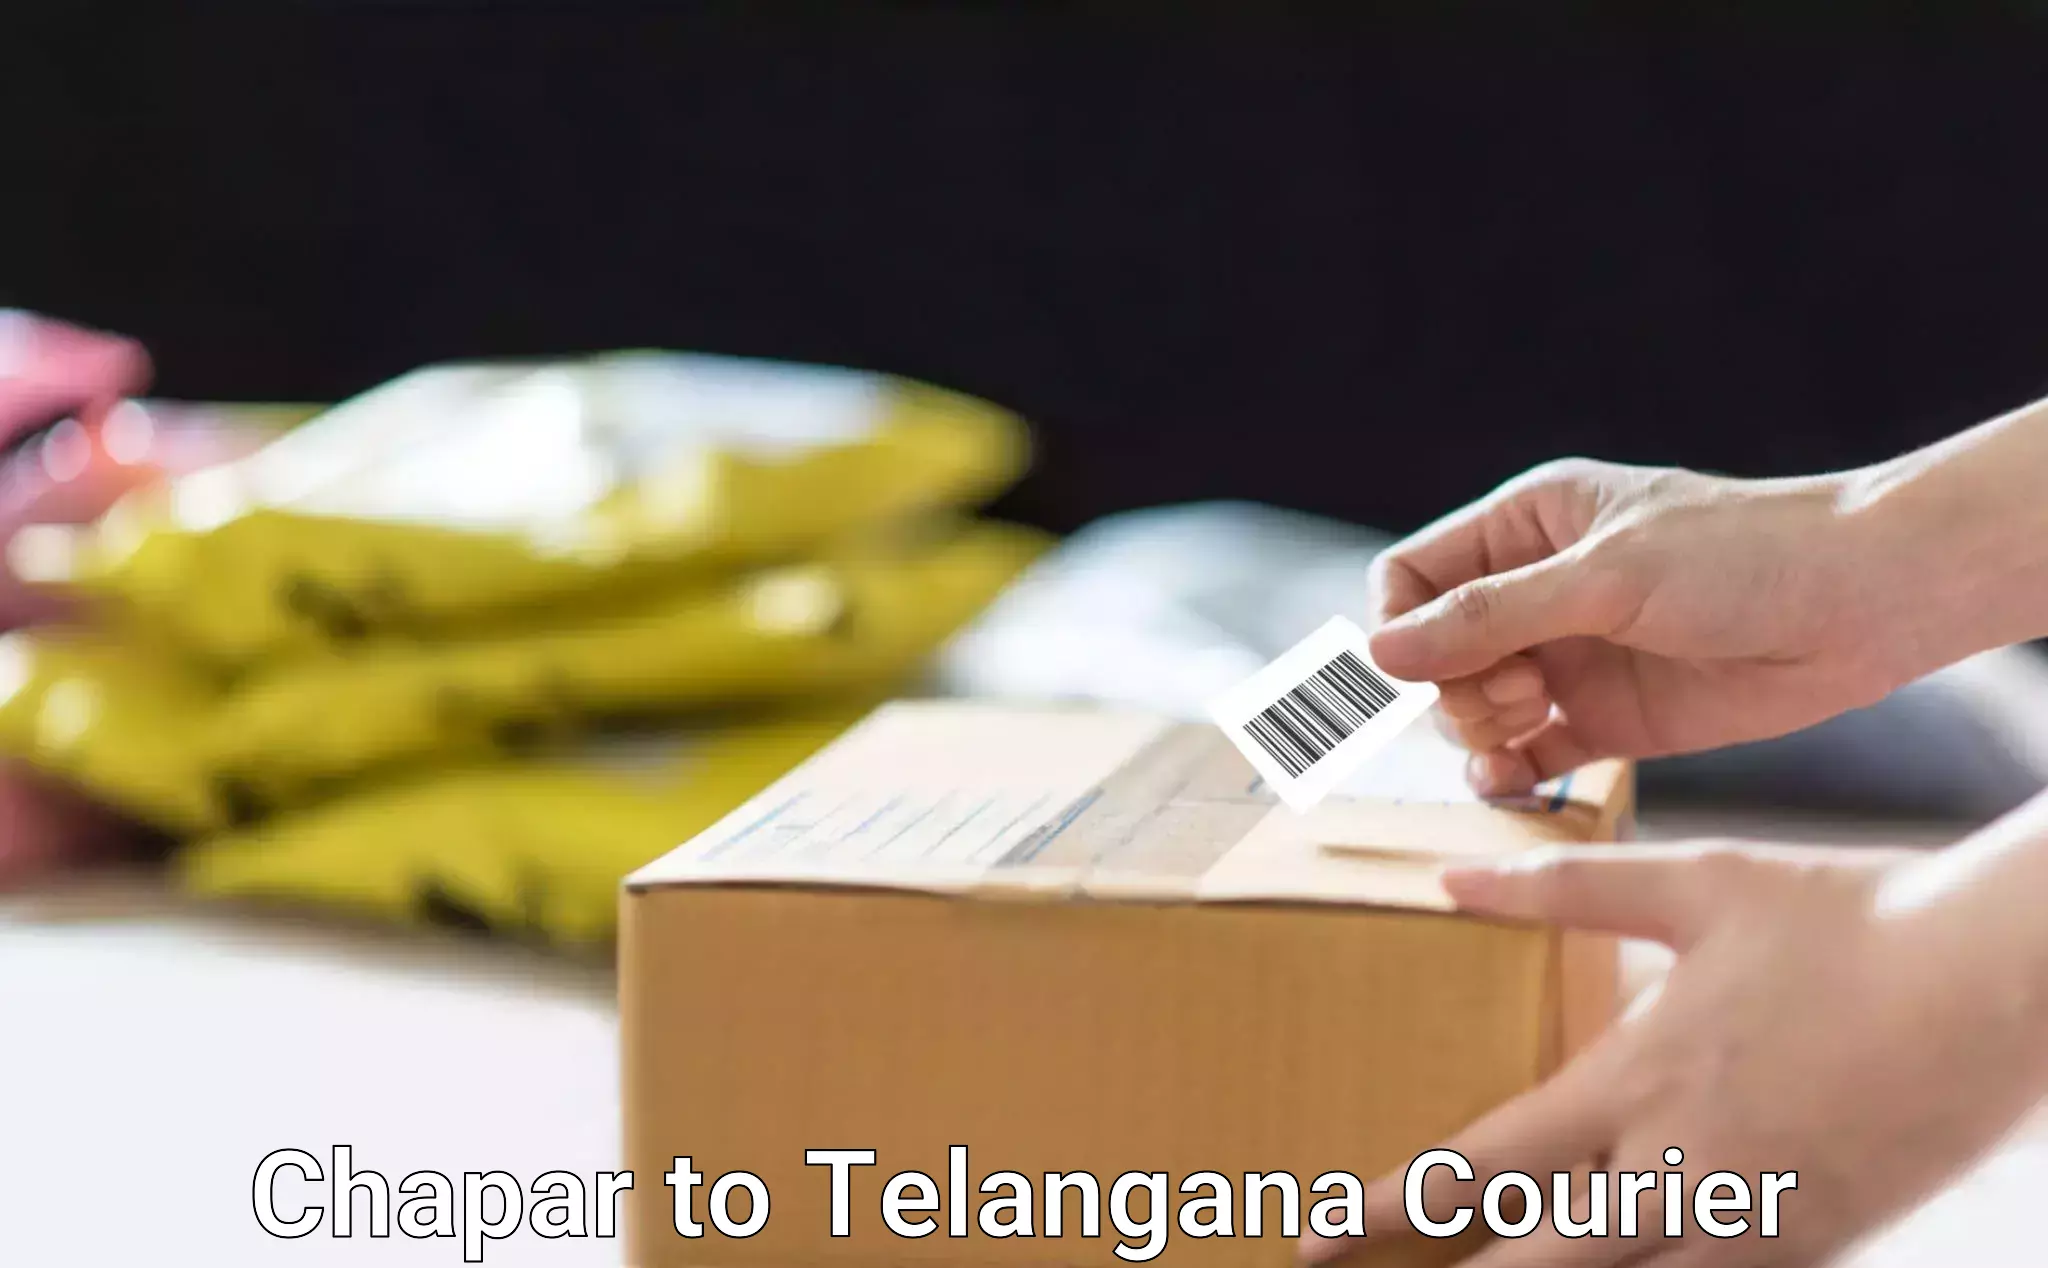 Seamless shipping experience Chapar to Telangana